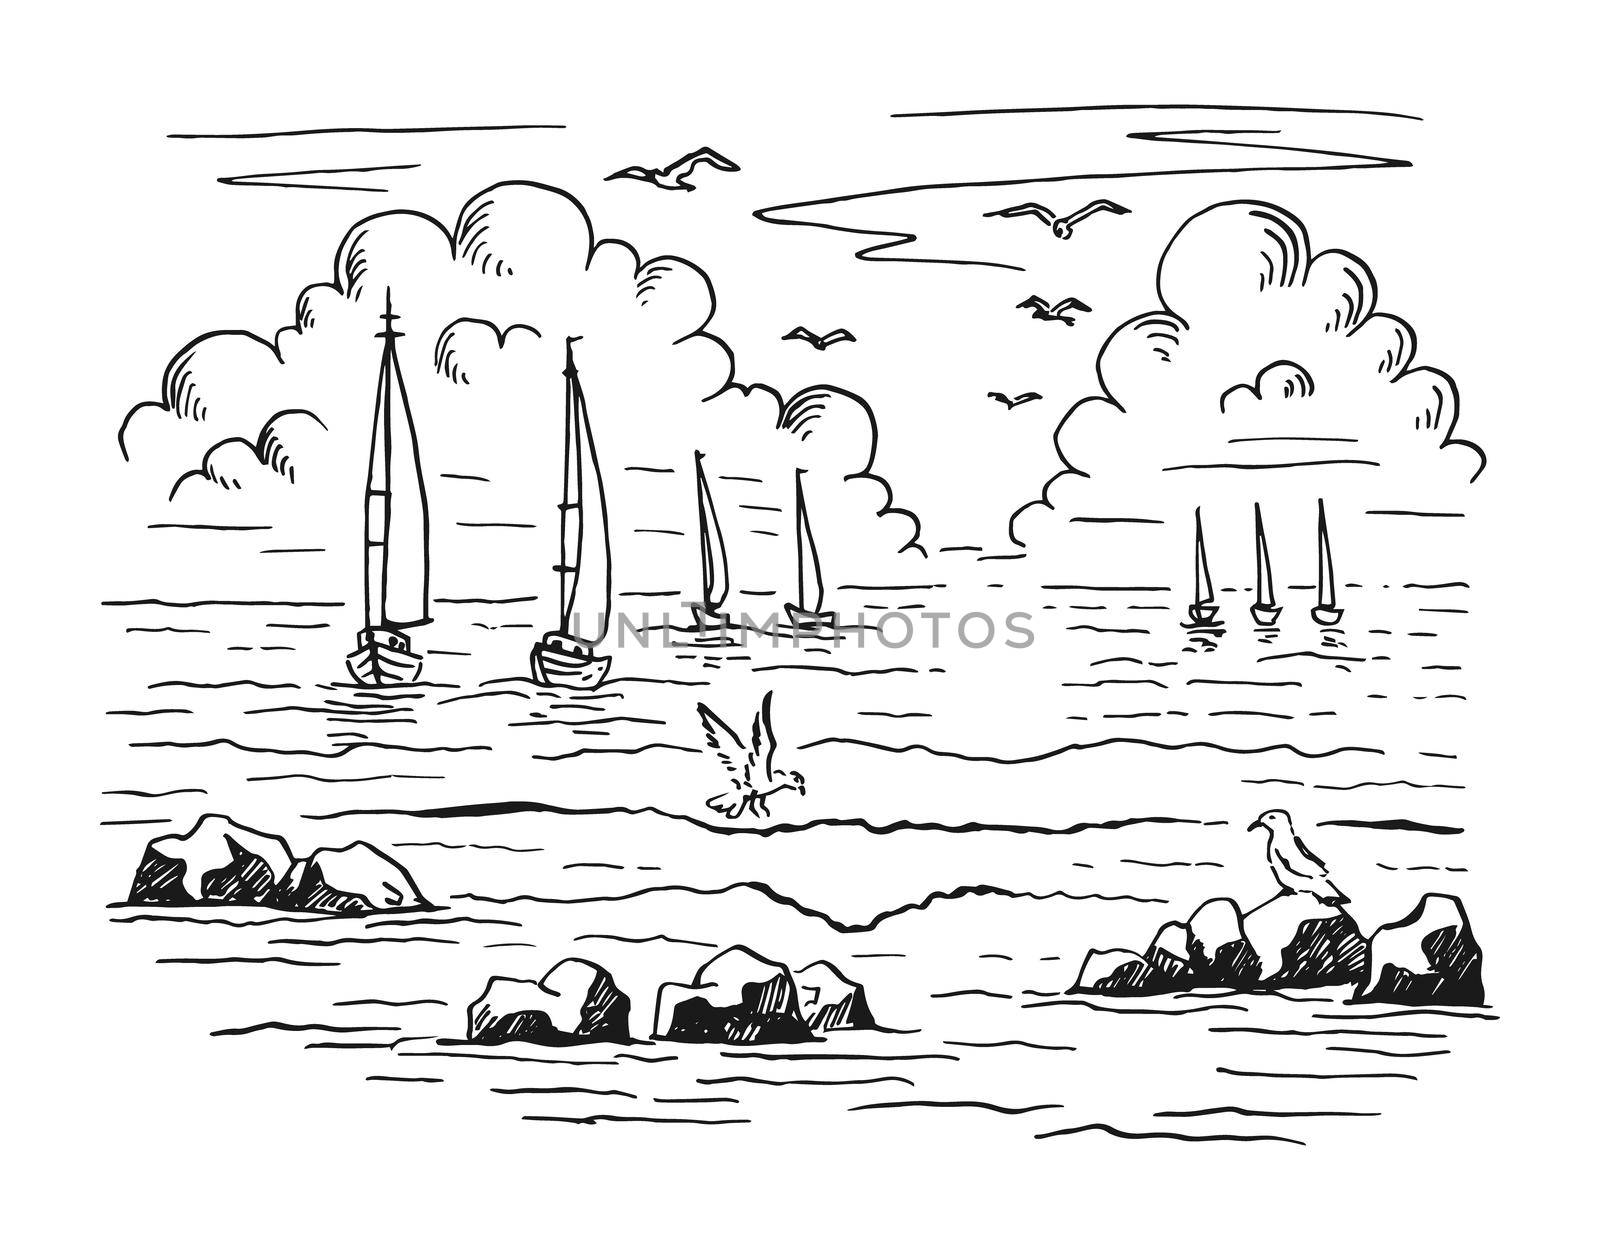 Seascape. Landscape, sea, sailboat, rocks, seagulls. Hand drawn vector illustration.